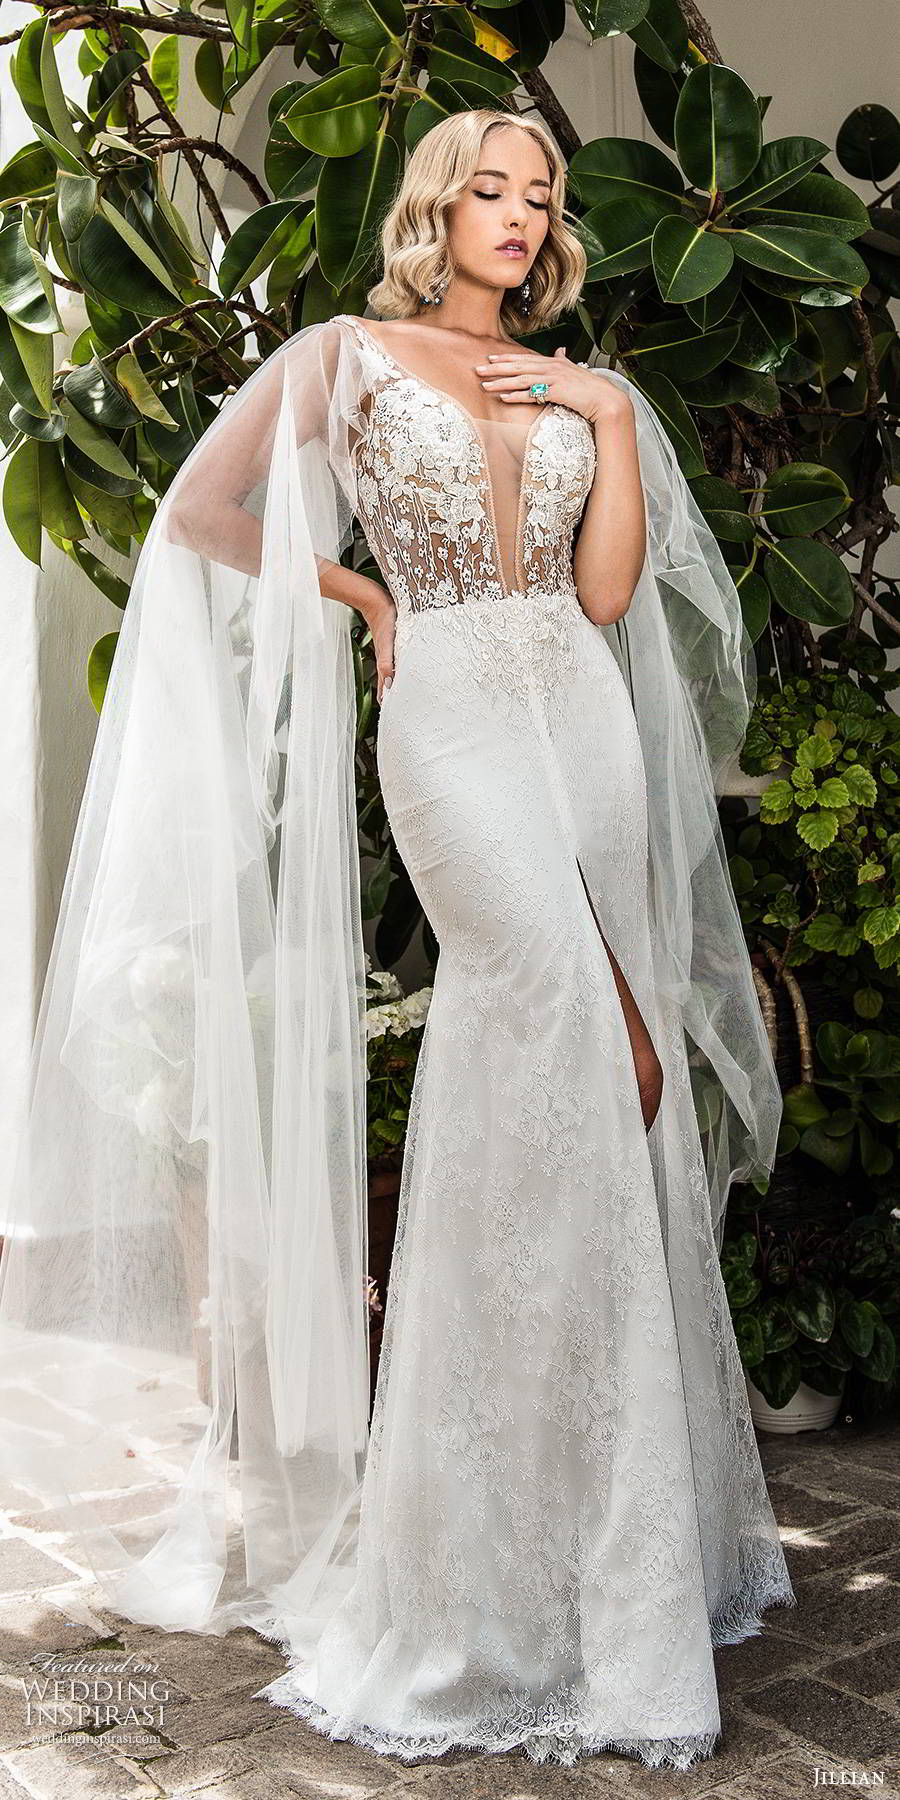 jillian sposa 2020 bridal illusion long flutter sleeves plunging v neckline slit skirt elegant glam lace fit flare wedding dress chapel train (1) mv